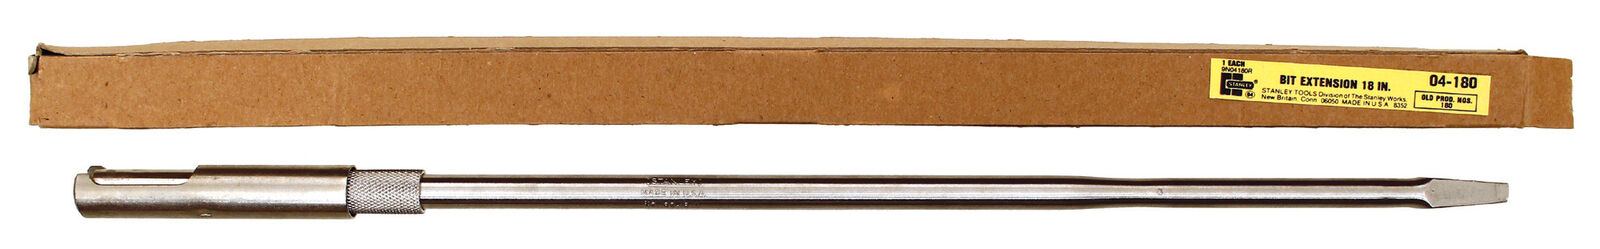 Stanley No. 180 Eighteen-inch Length Auger Bit Extension - Old Hardware Stock